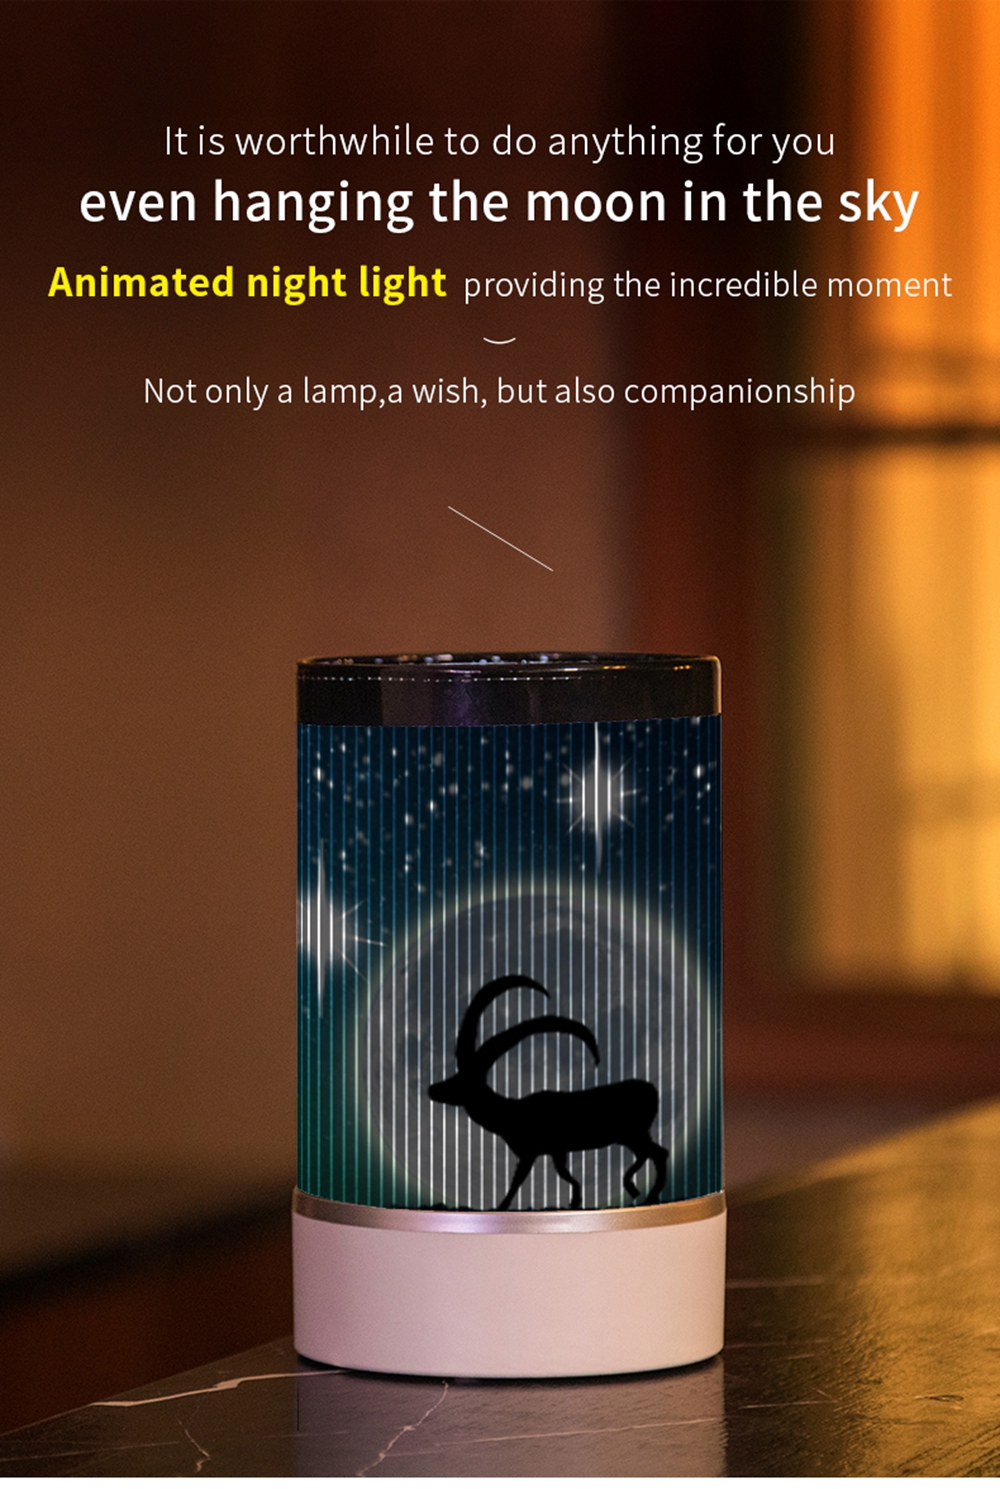 DC5V-USB-LED-4-Pattern-Animated-Night-Light-Remote-Control-for-Kids-Bedroom-1577748-1